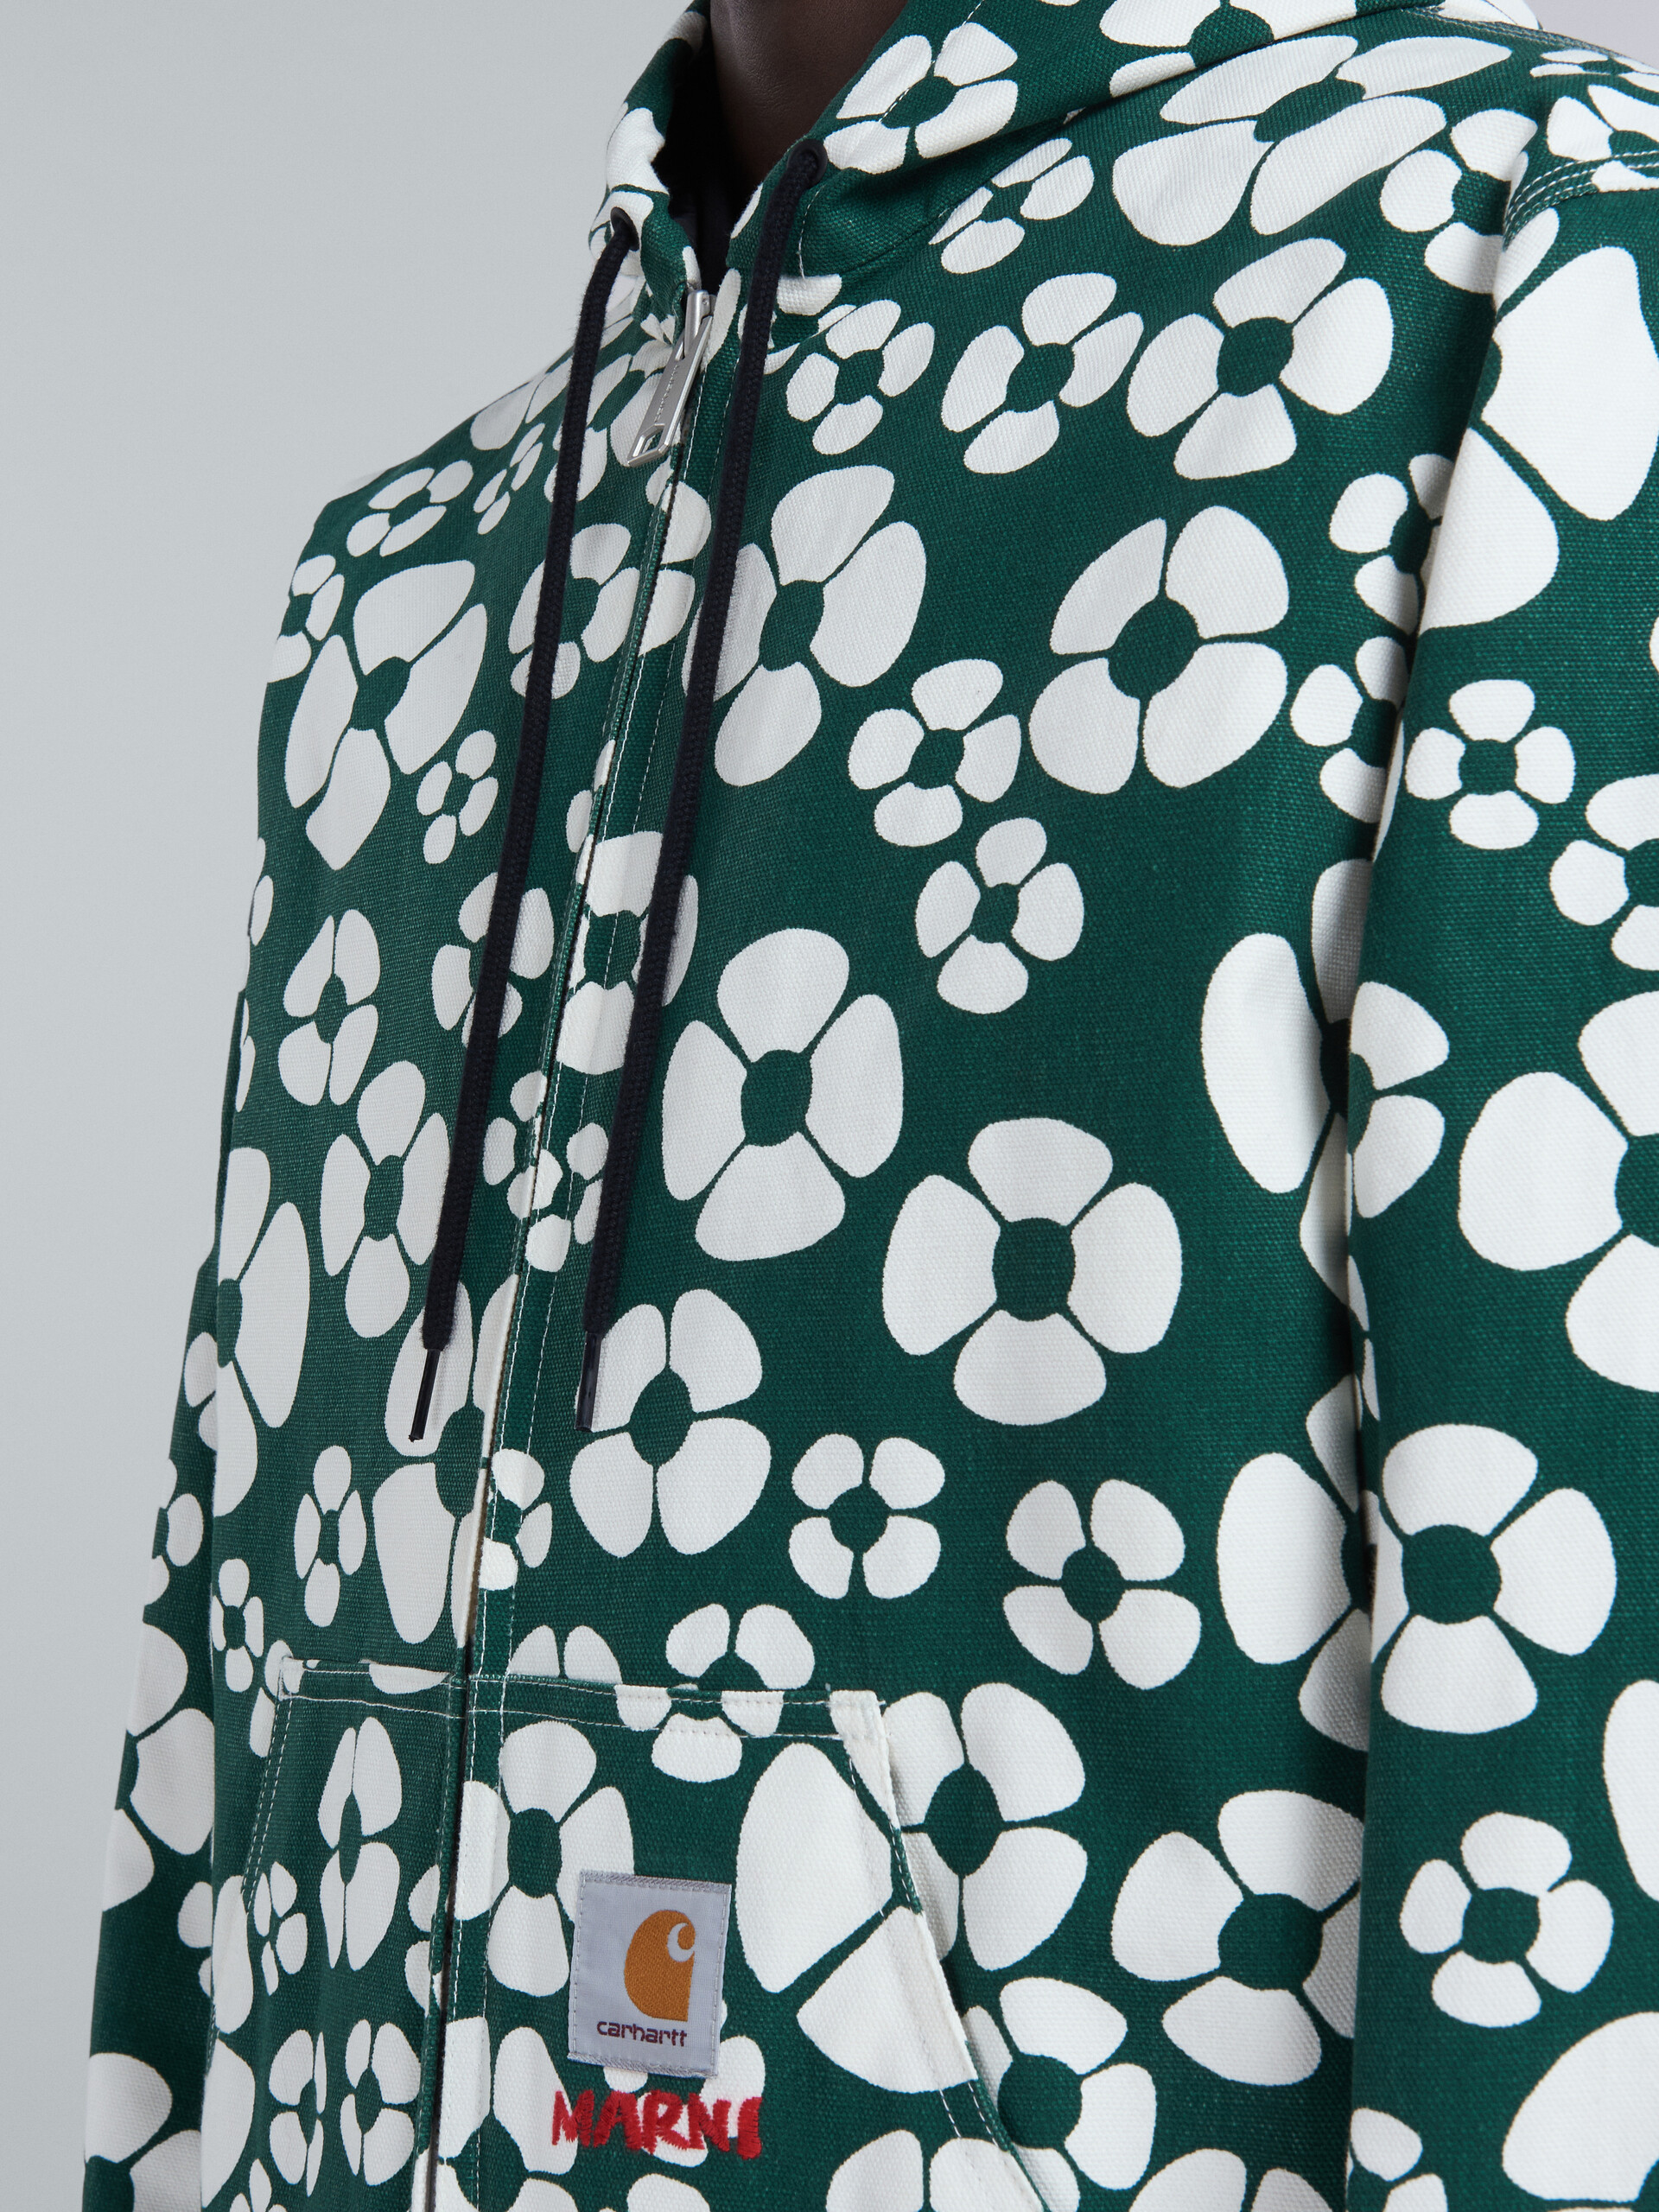 MARNI x CARHARTT WIP - green long-sleeved floral jacket - Jackets - Image 5